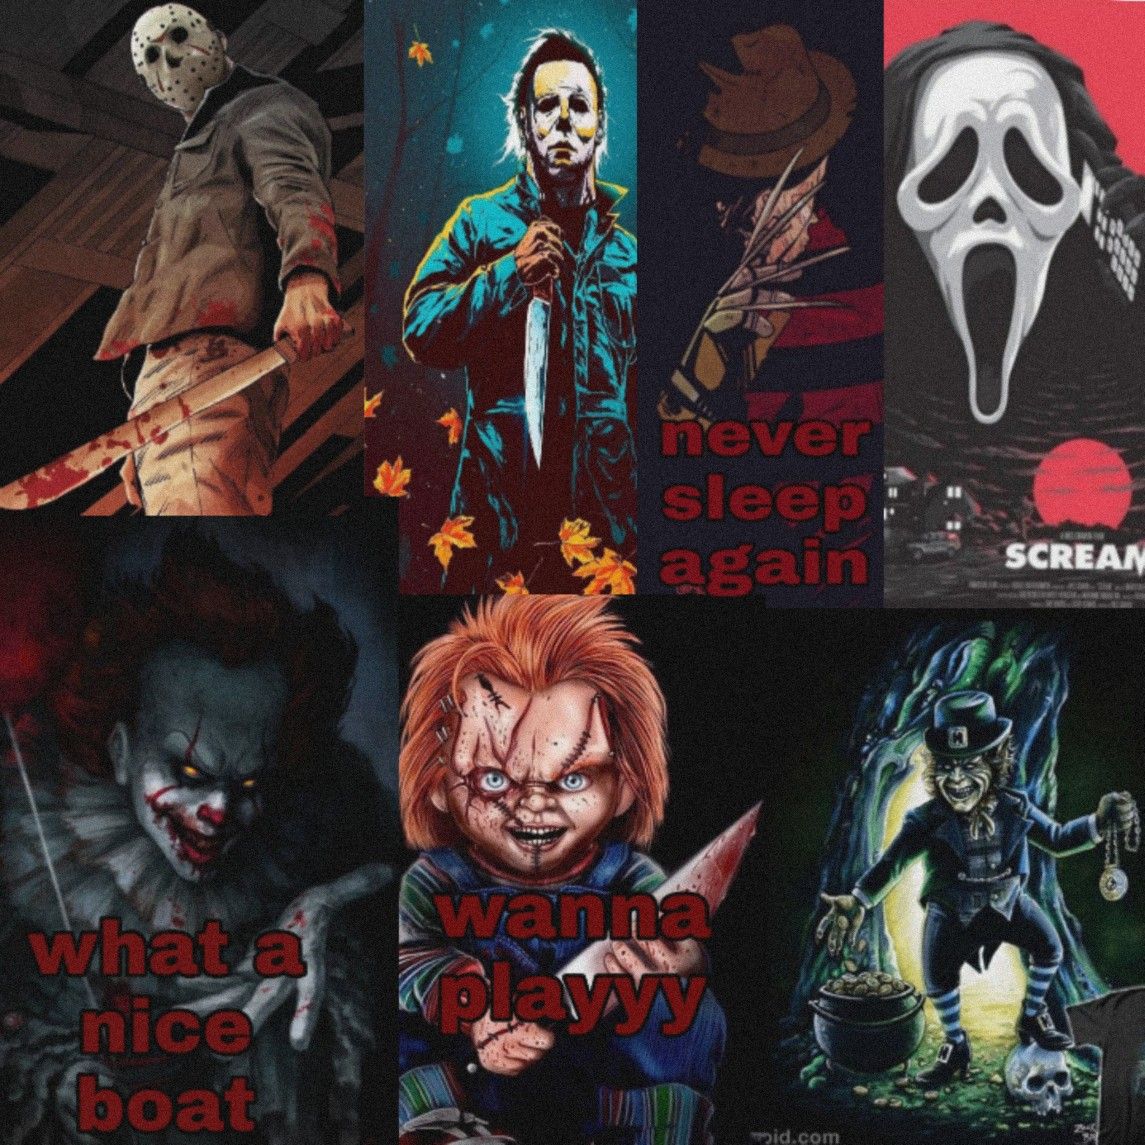 Horror movie wallpaper. Horror movies, Movie wallpaper, Horror movie posters